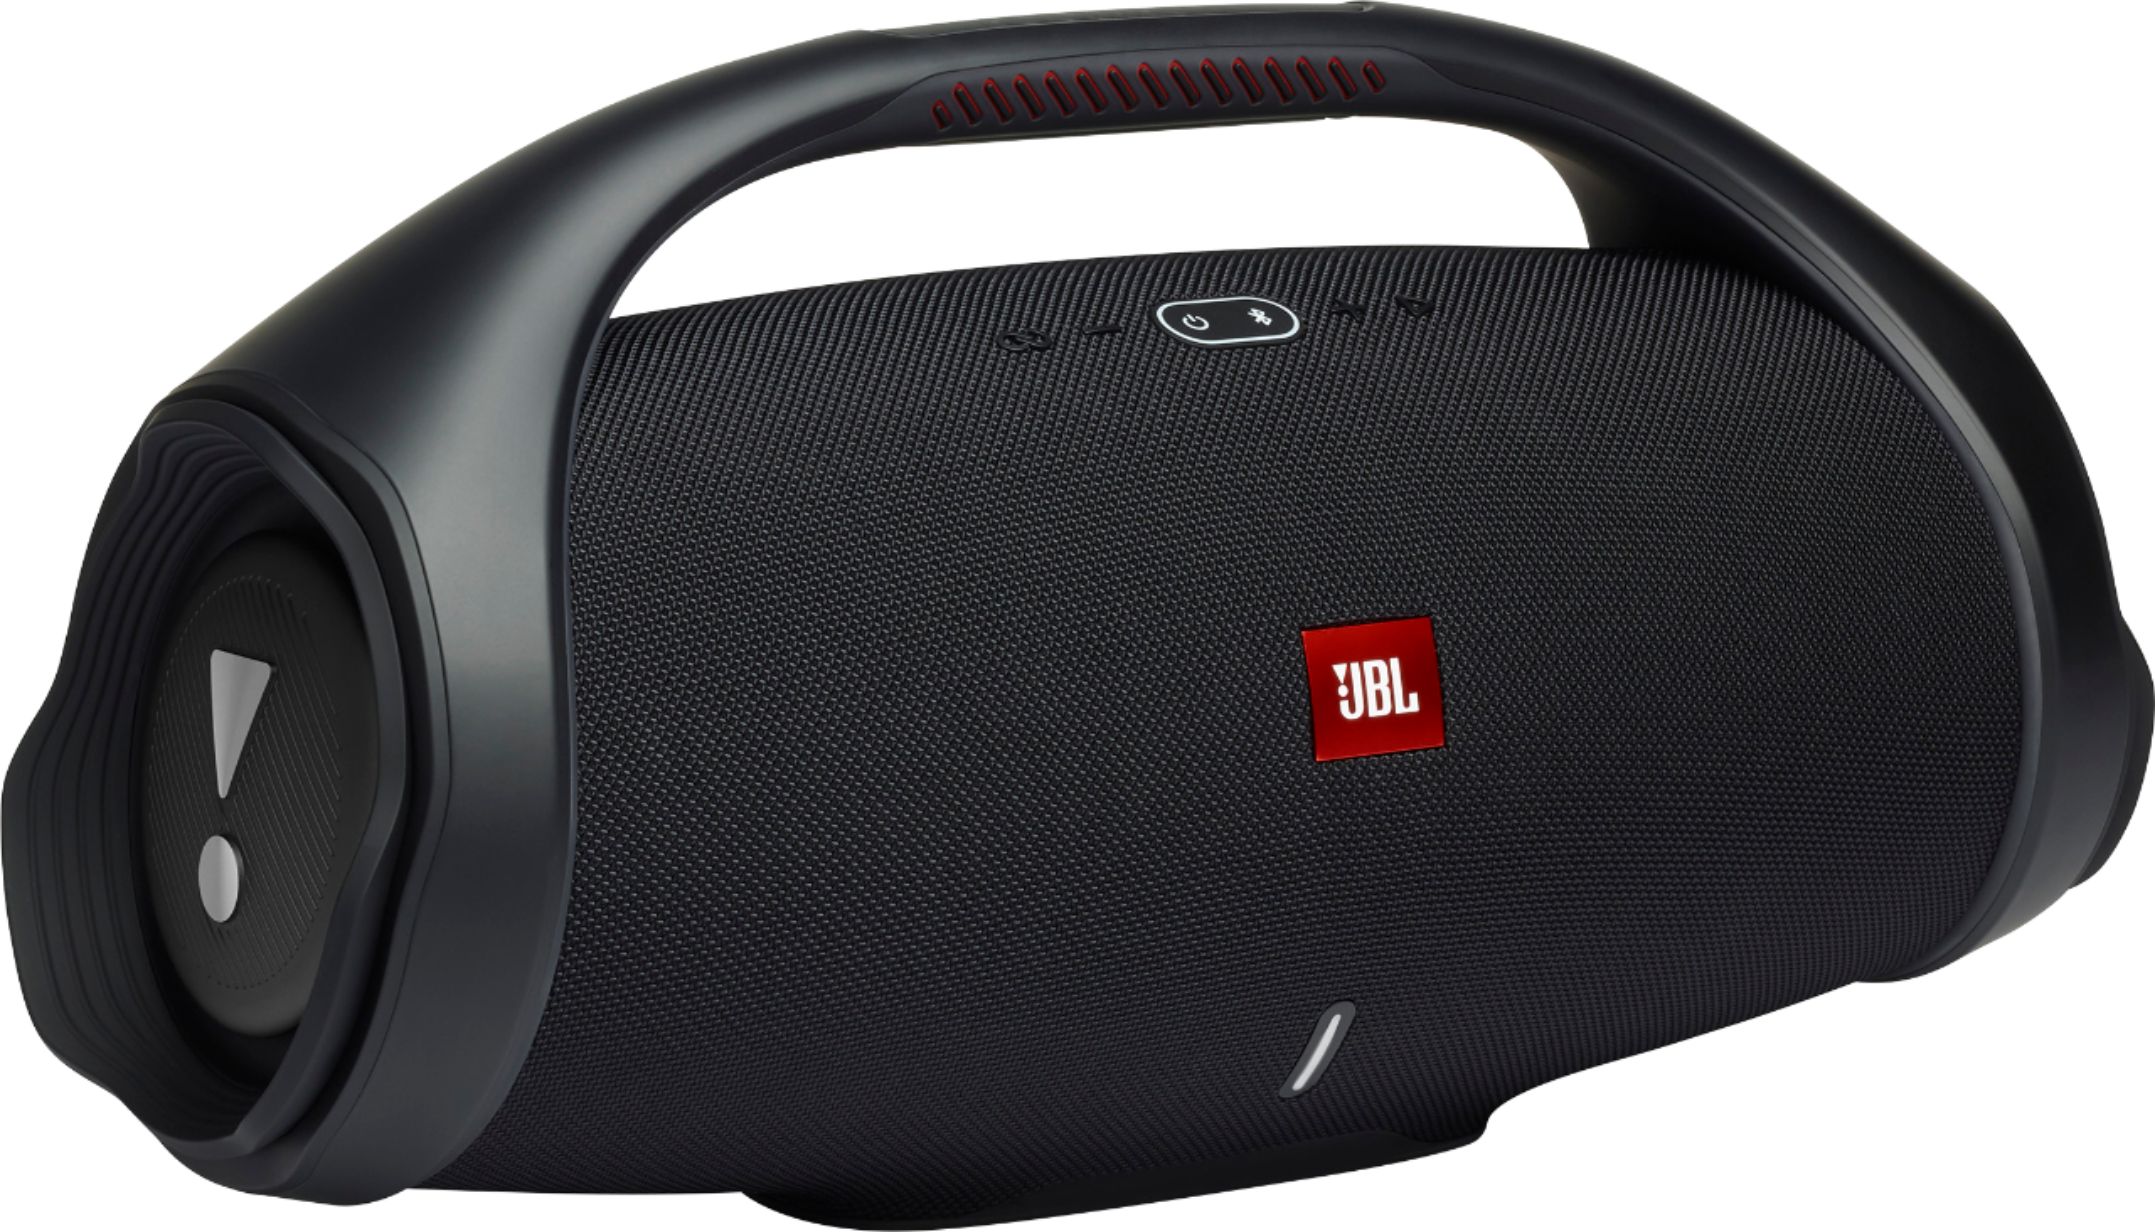 Angle View: JBL - Boombox 2 Portable Bluetooth Speaker - Black